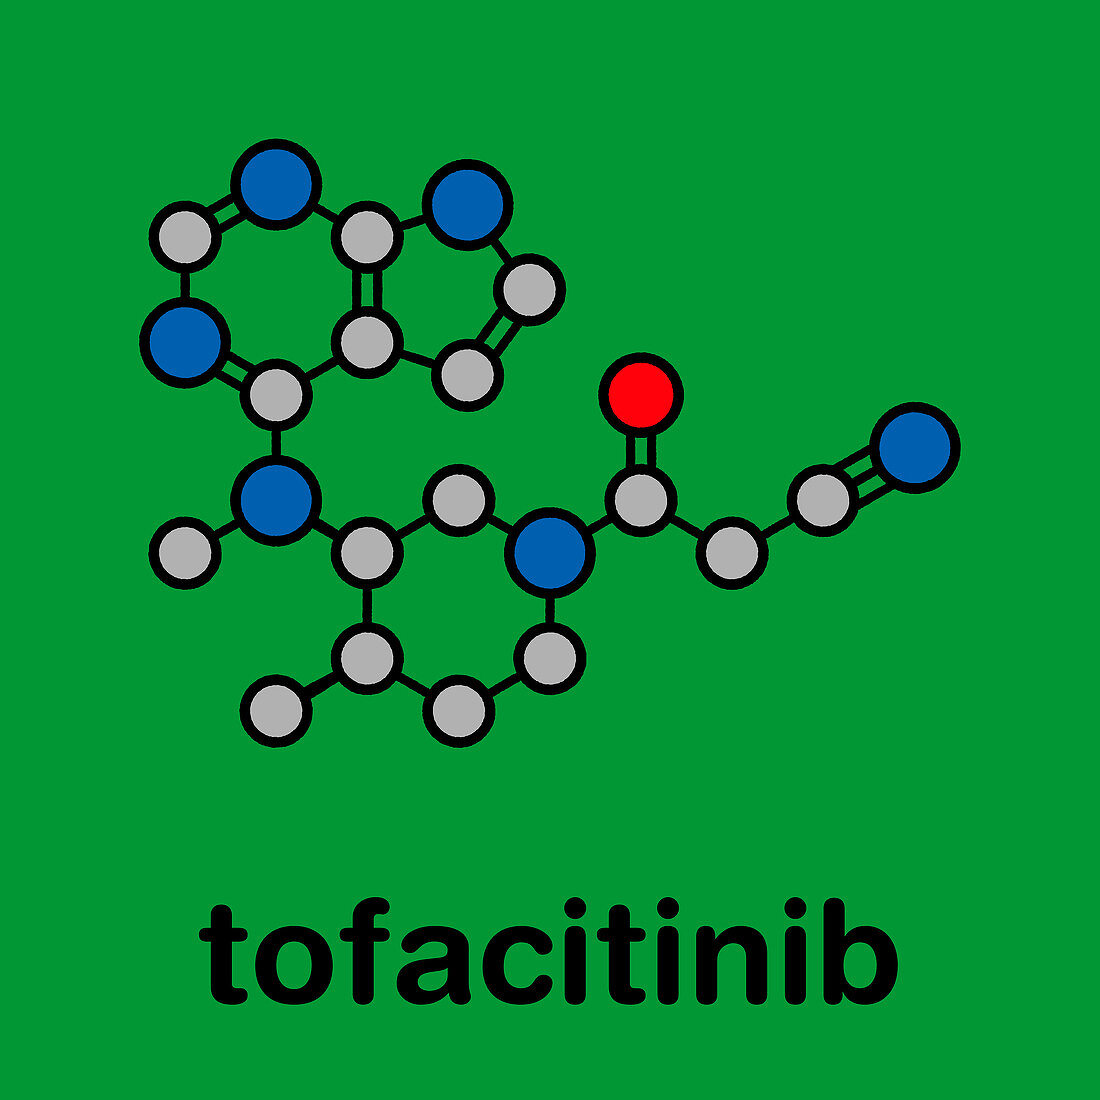 Tofacitinib rheumatoid arthritis drug, molecular model